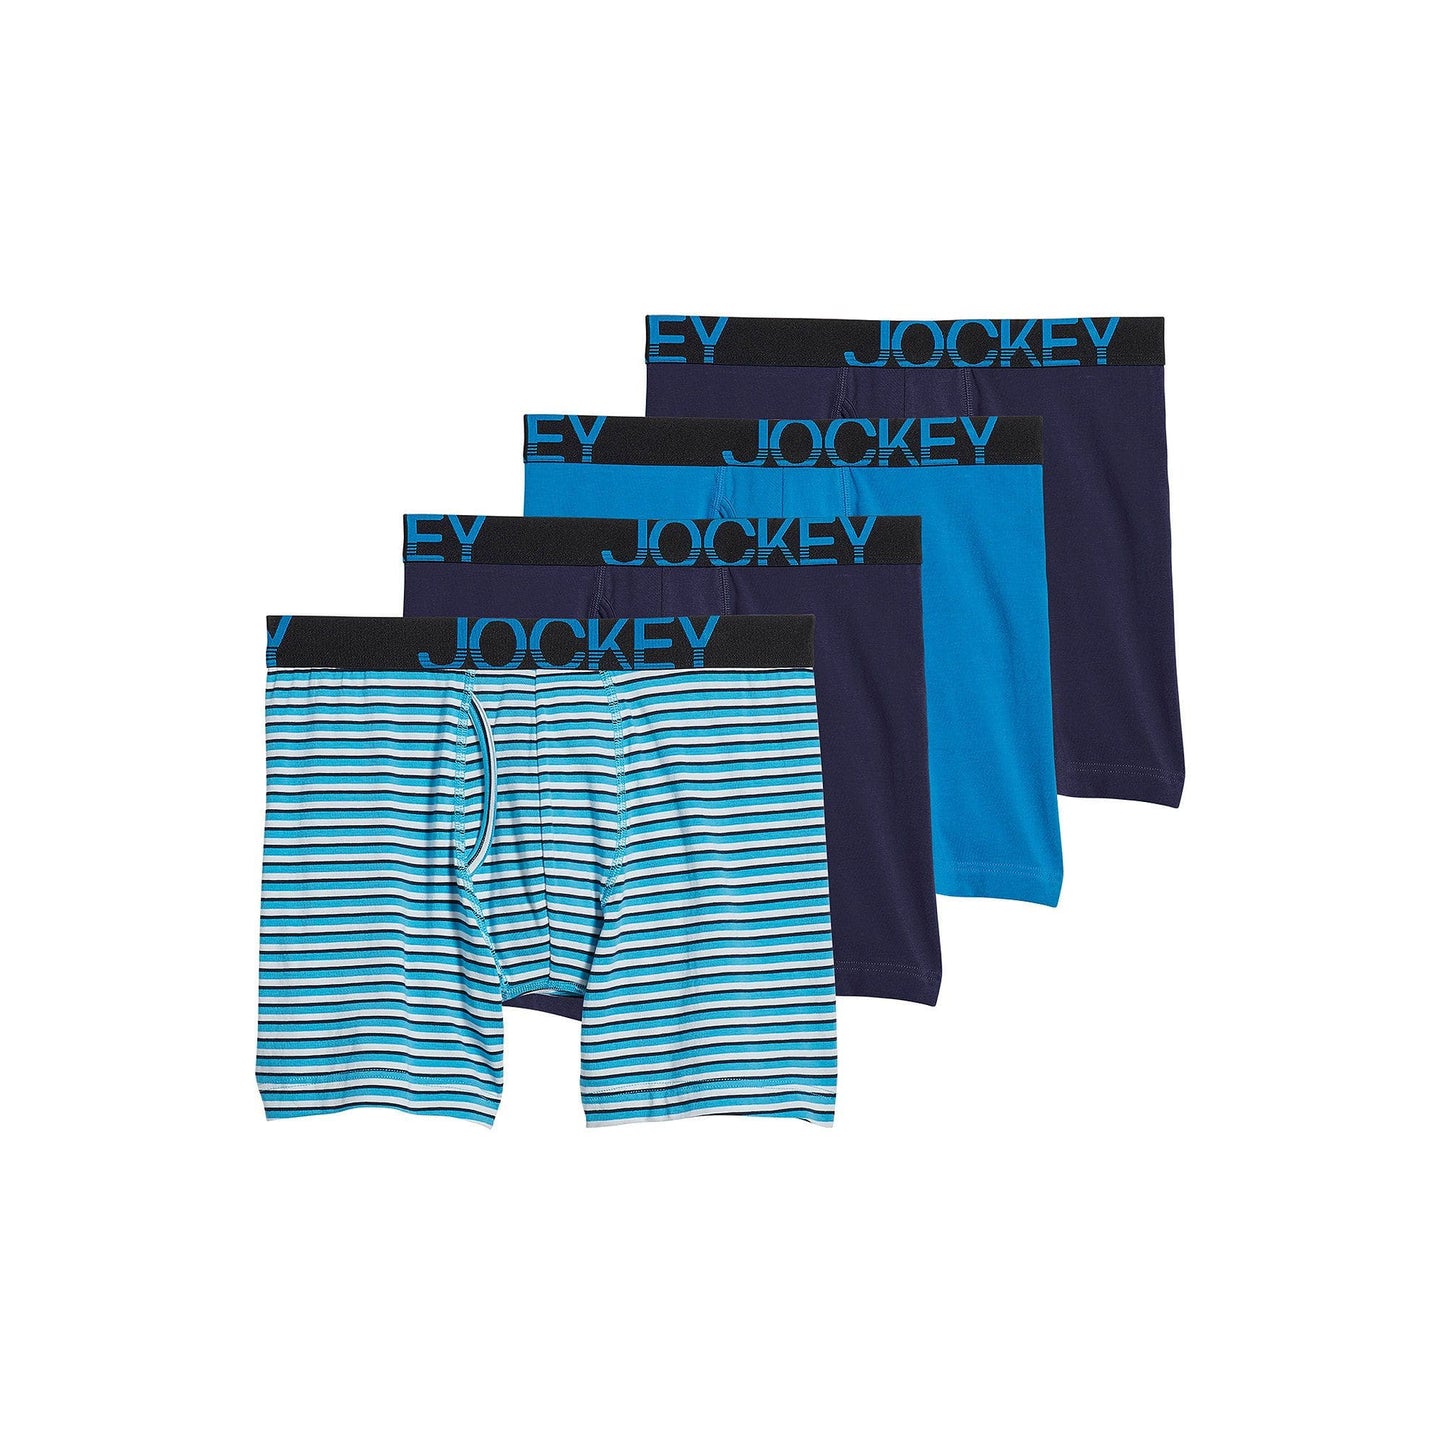 JOCKEY Mens Underwear X-Large / Multi-color JOCKEY - Underwear ActiveStretch Midway Brief - 4 Pack